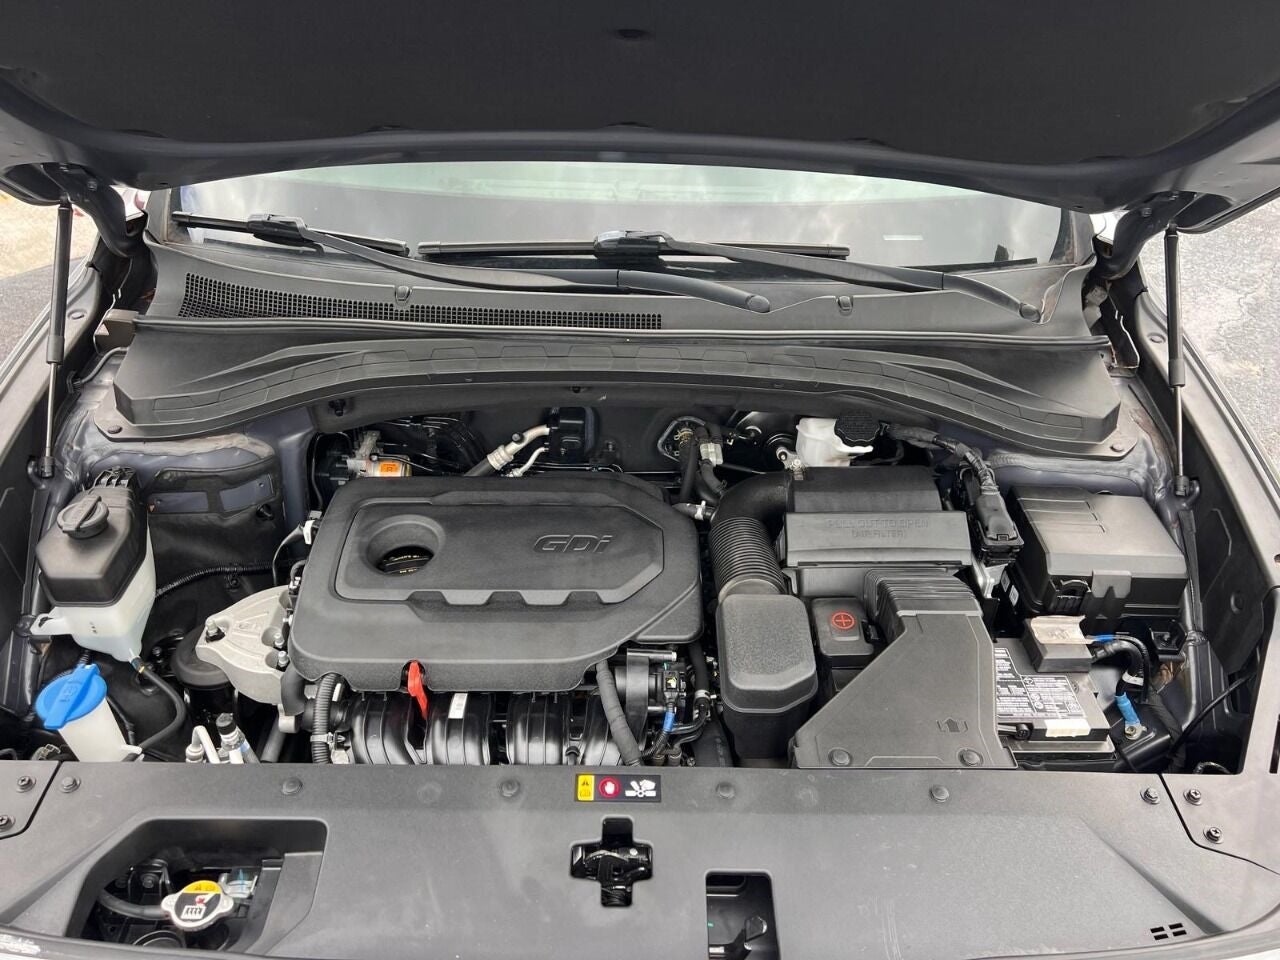 2019 Hyundai Santa Fe SEL Plus 2.4L 4dr Crossover